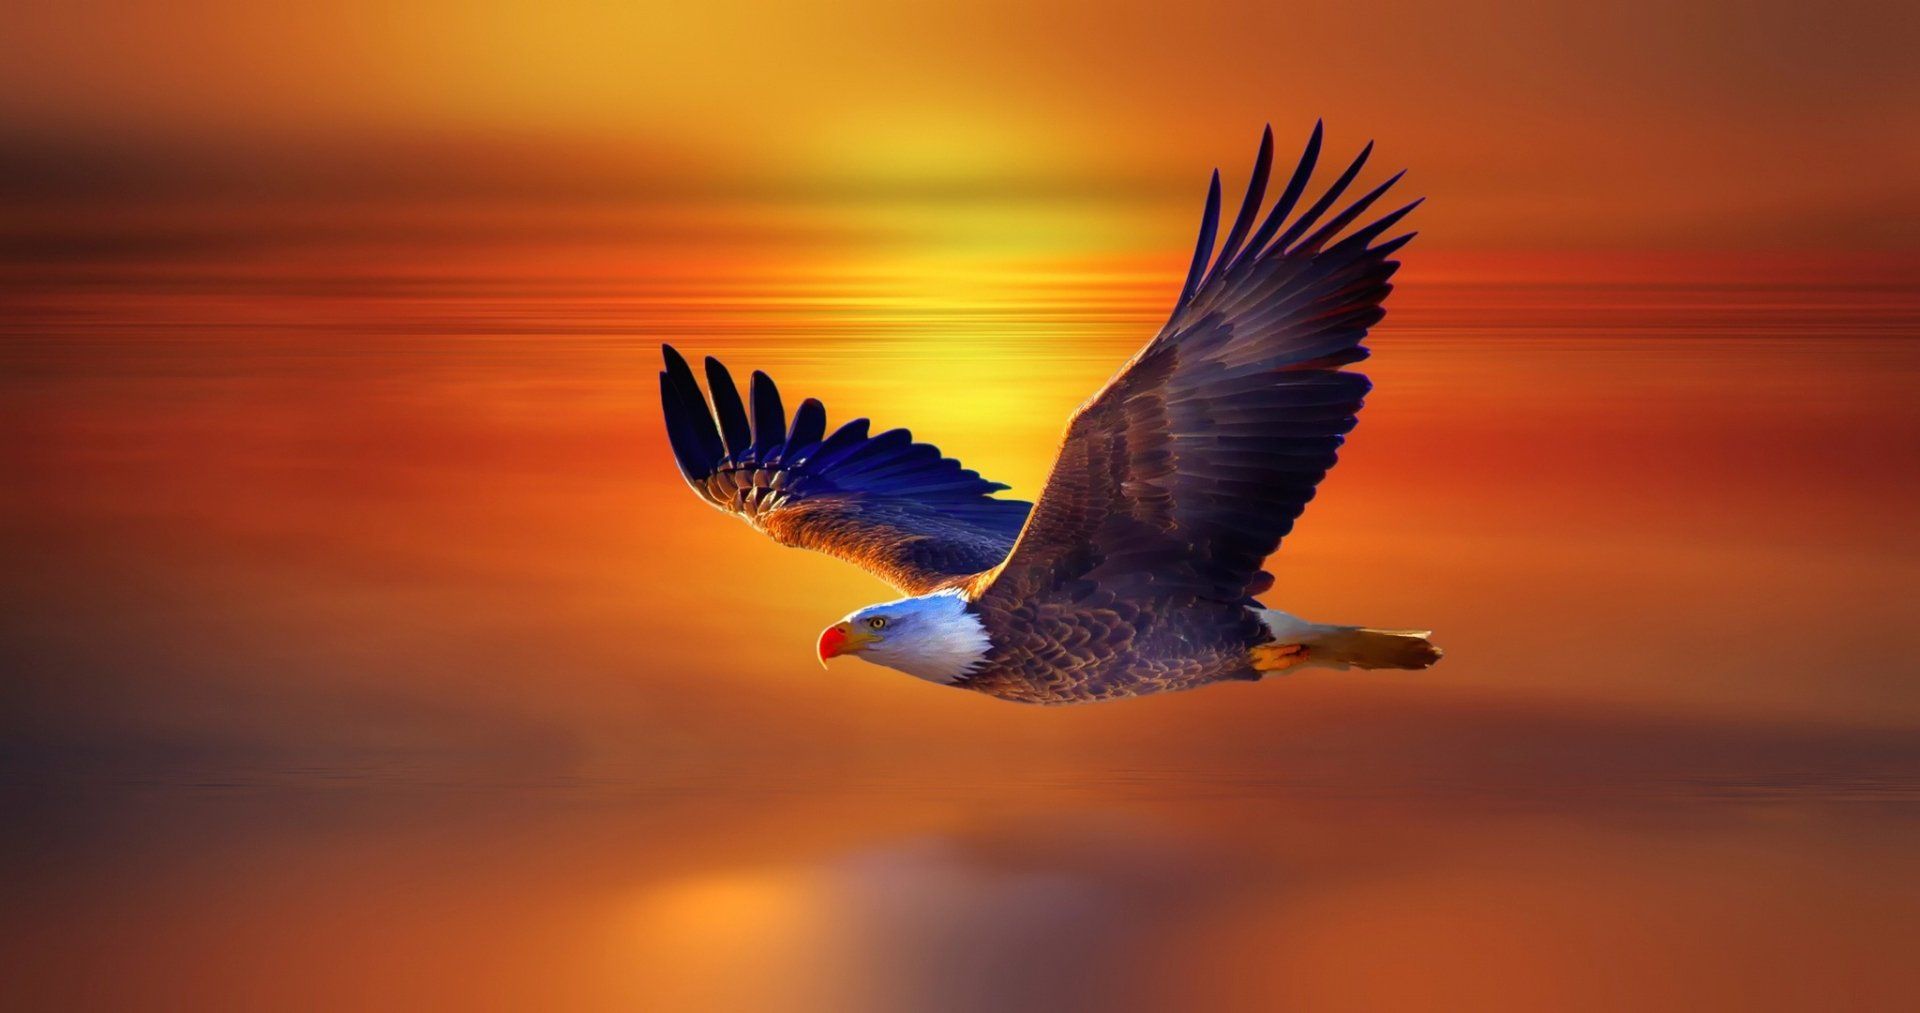 Animal Bald Eagle Sunset Flight Eagle Wallpaper. Eagle wallpaper, Bald eagle, Eagle painting